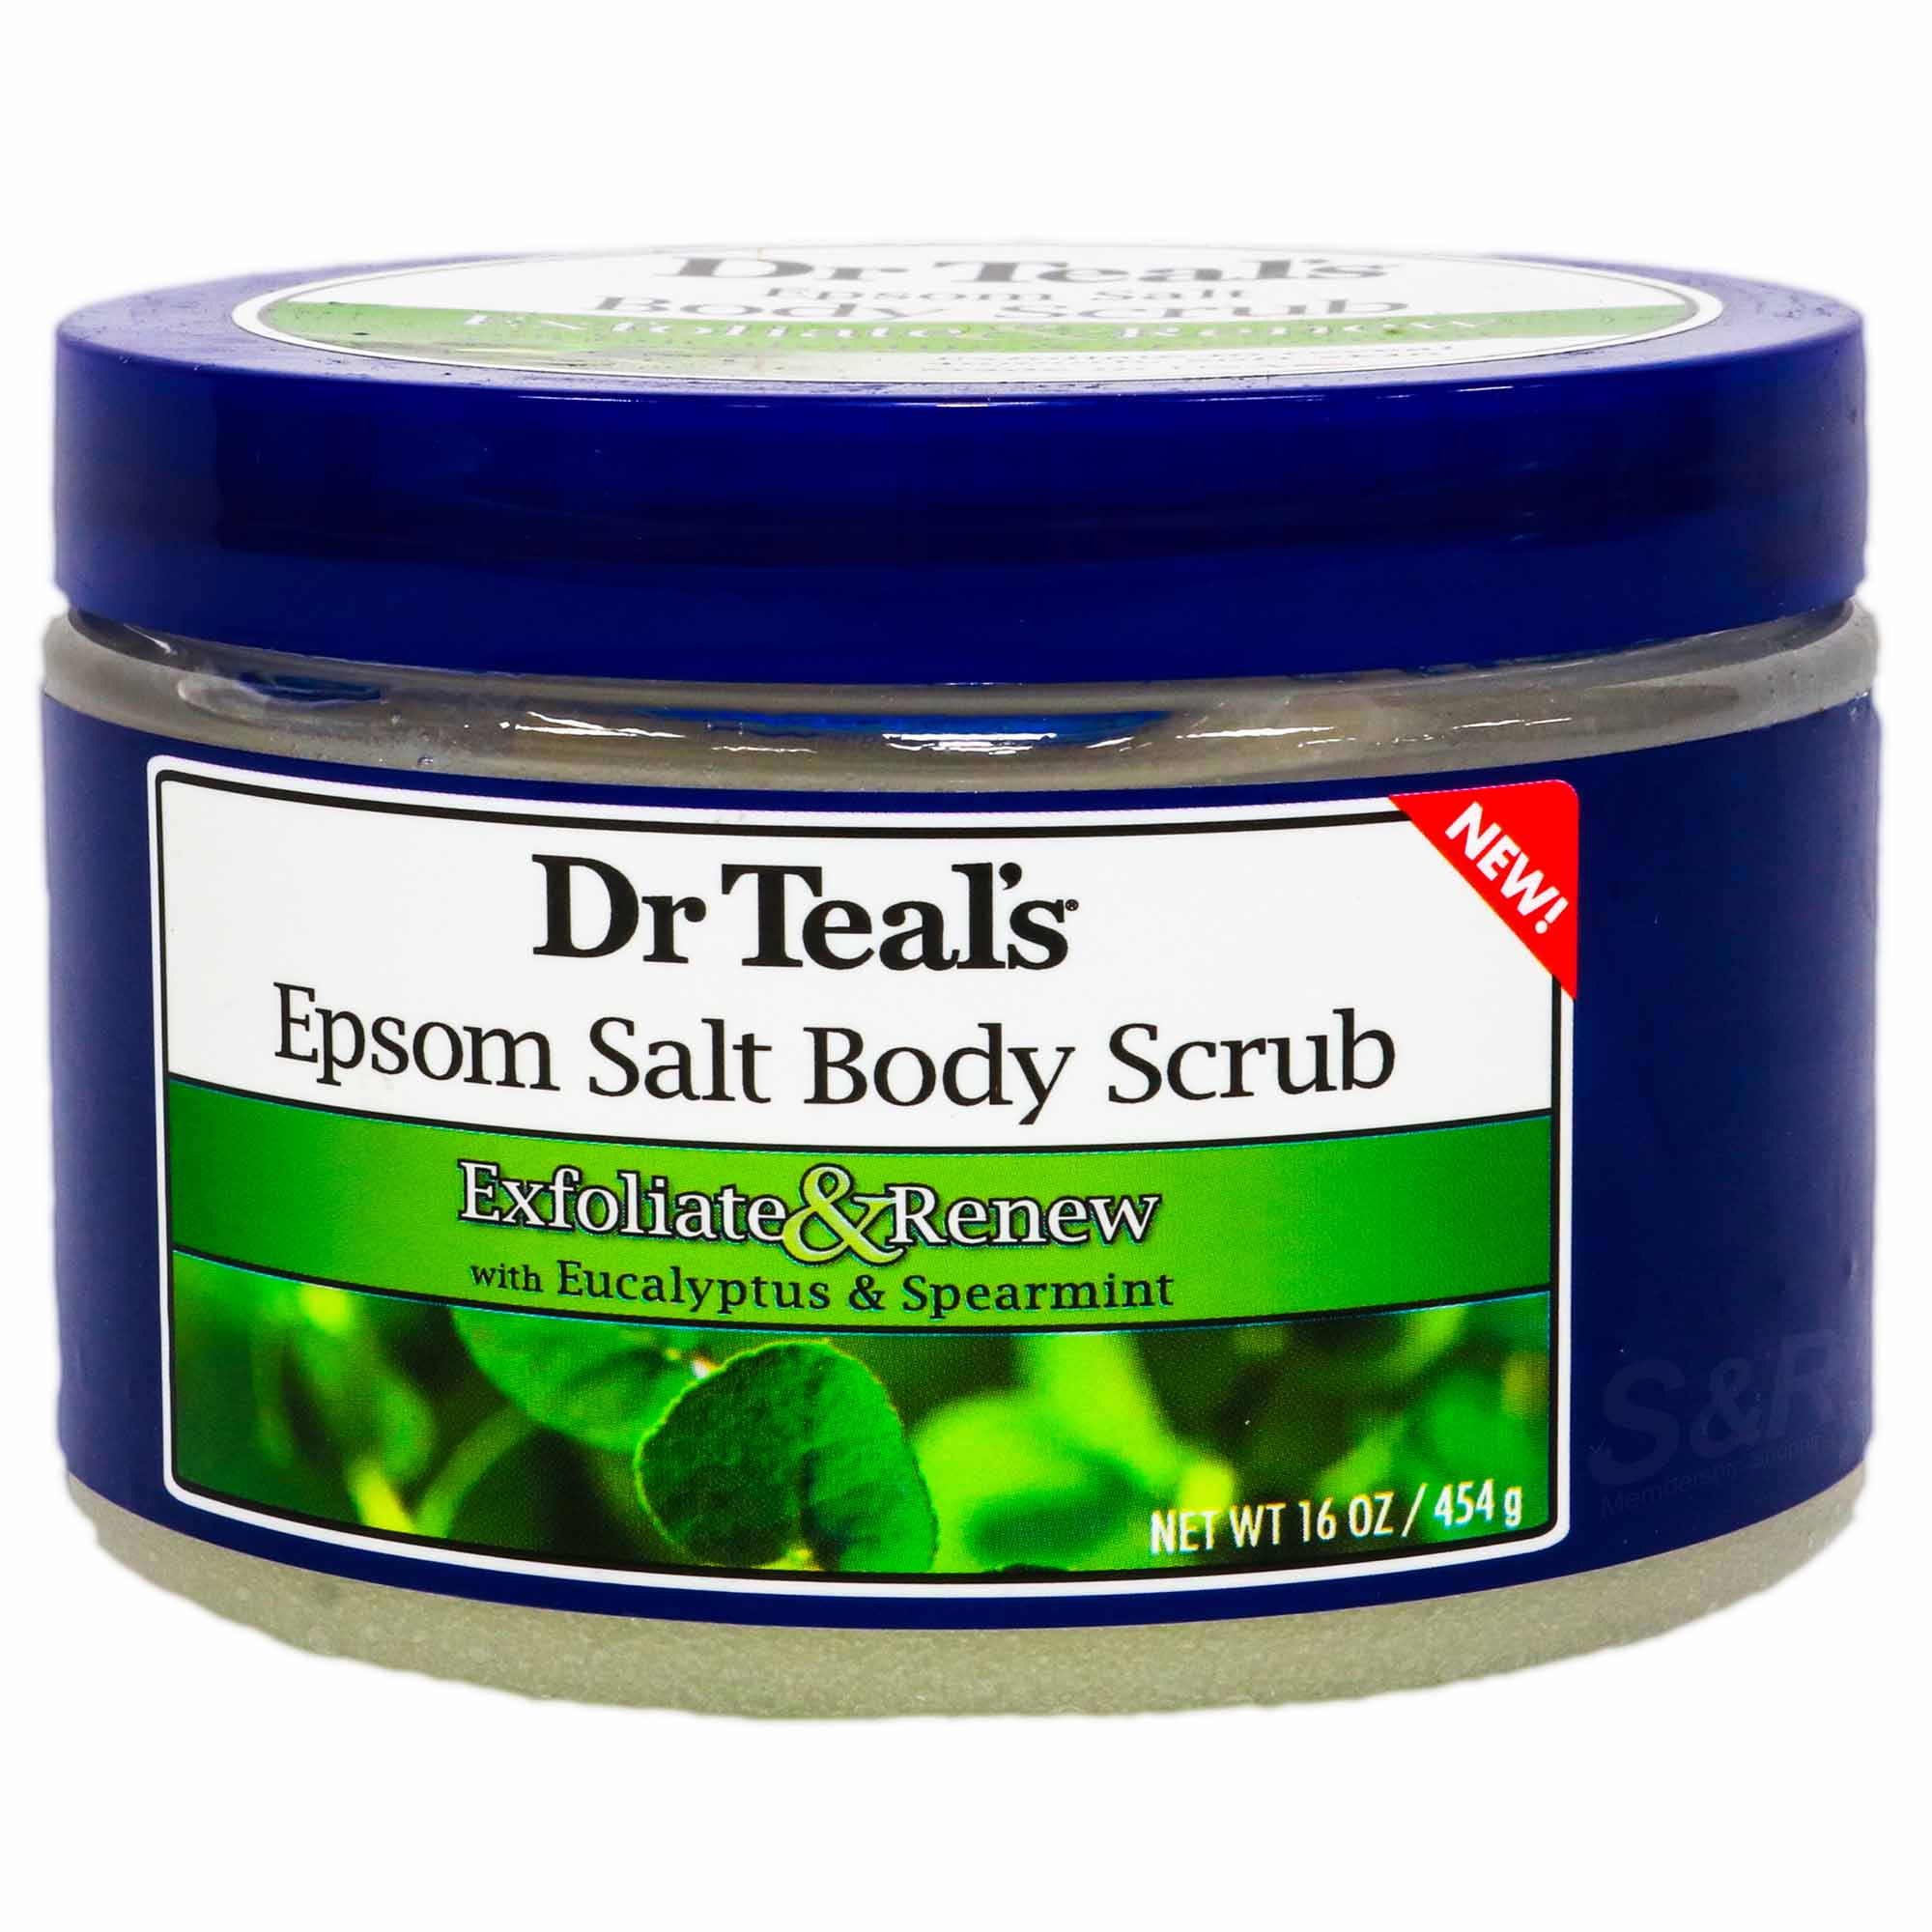 Dr. Teal's Exfoliate and Renew Epsom Salt Body Scrub 454g